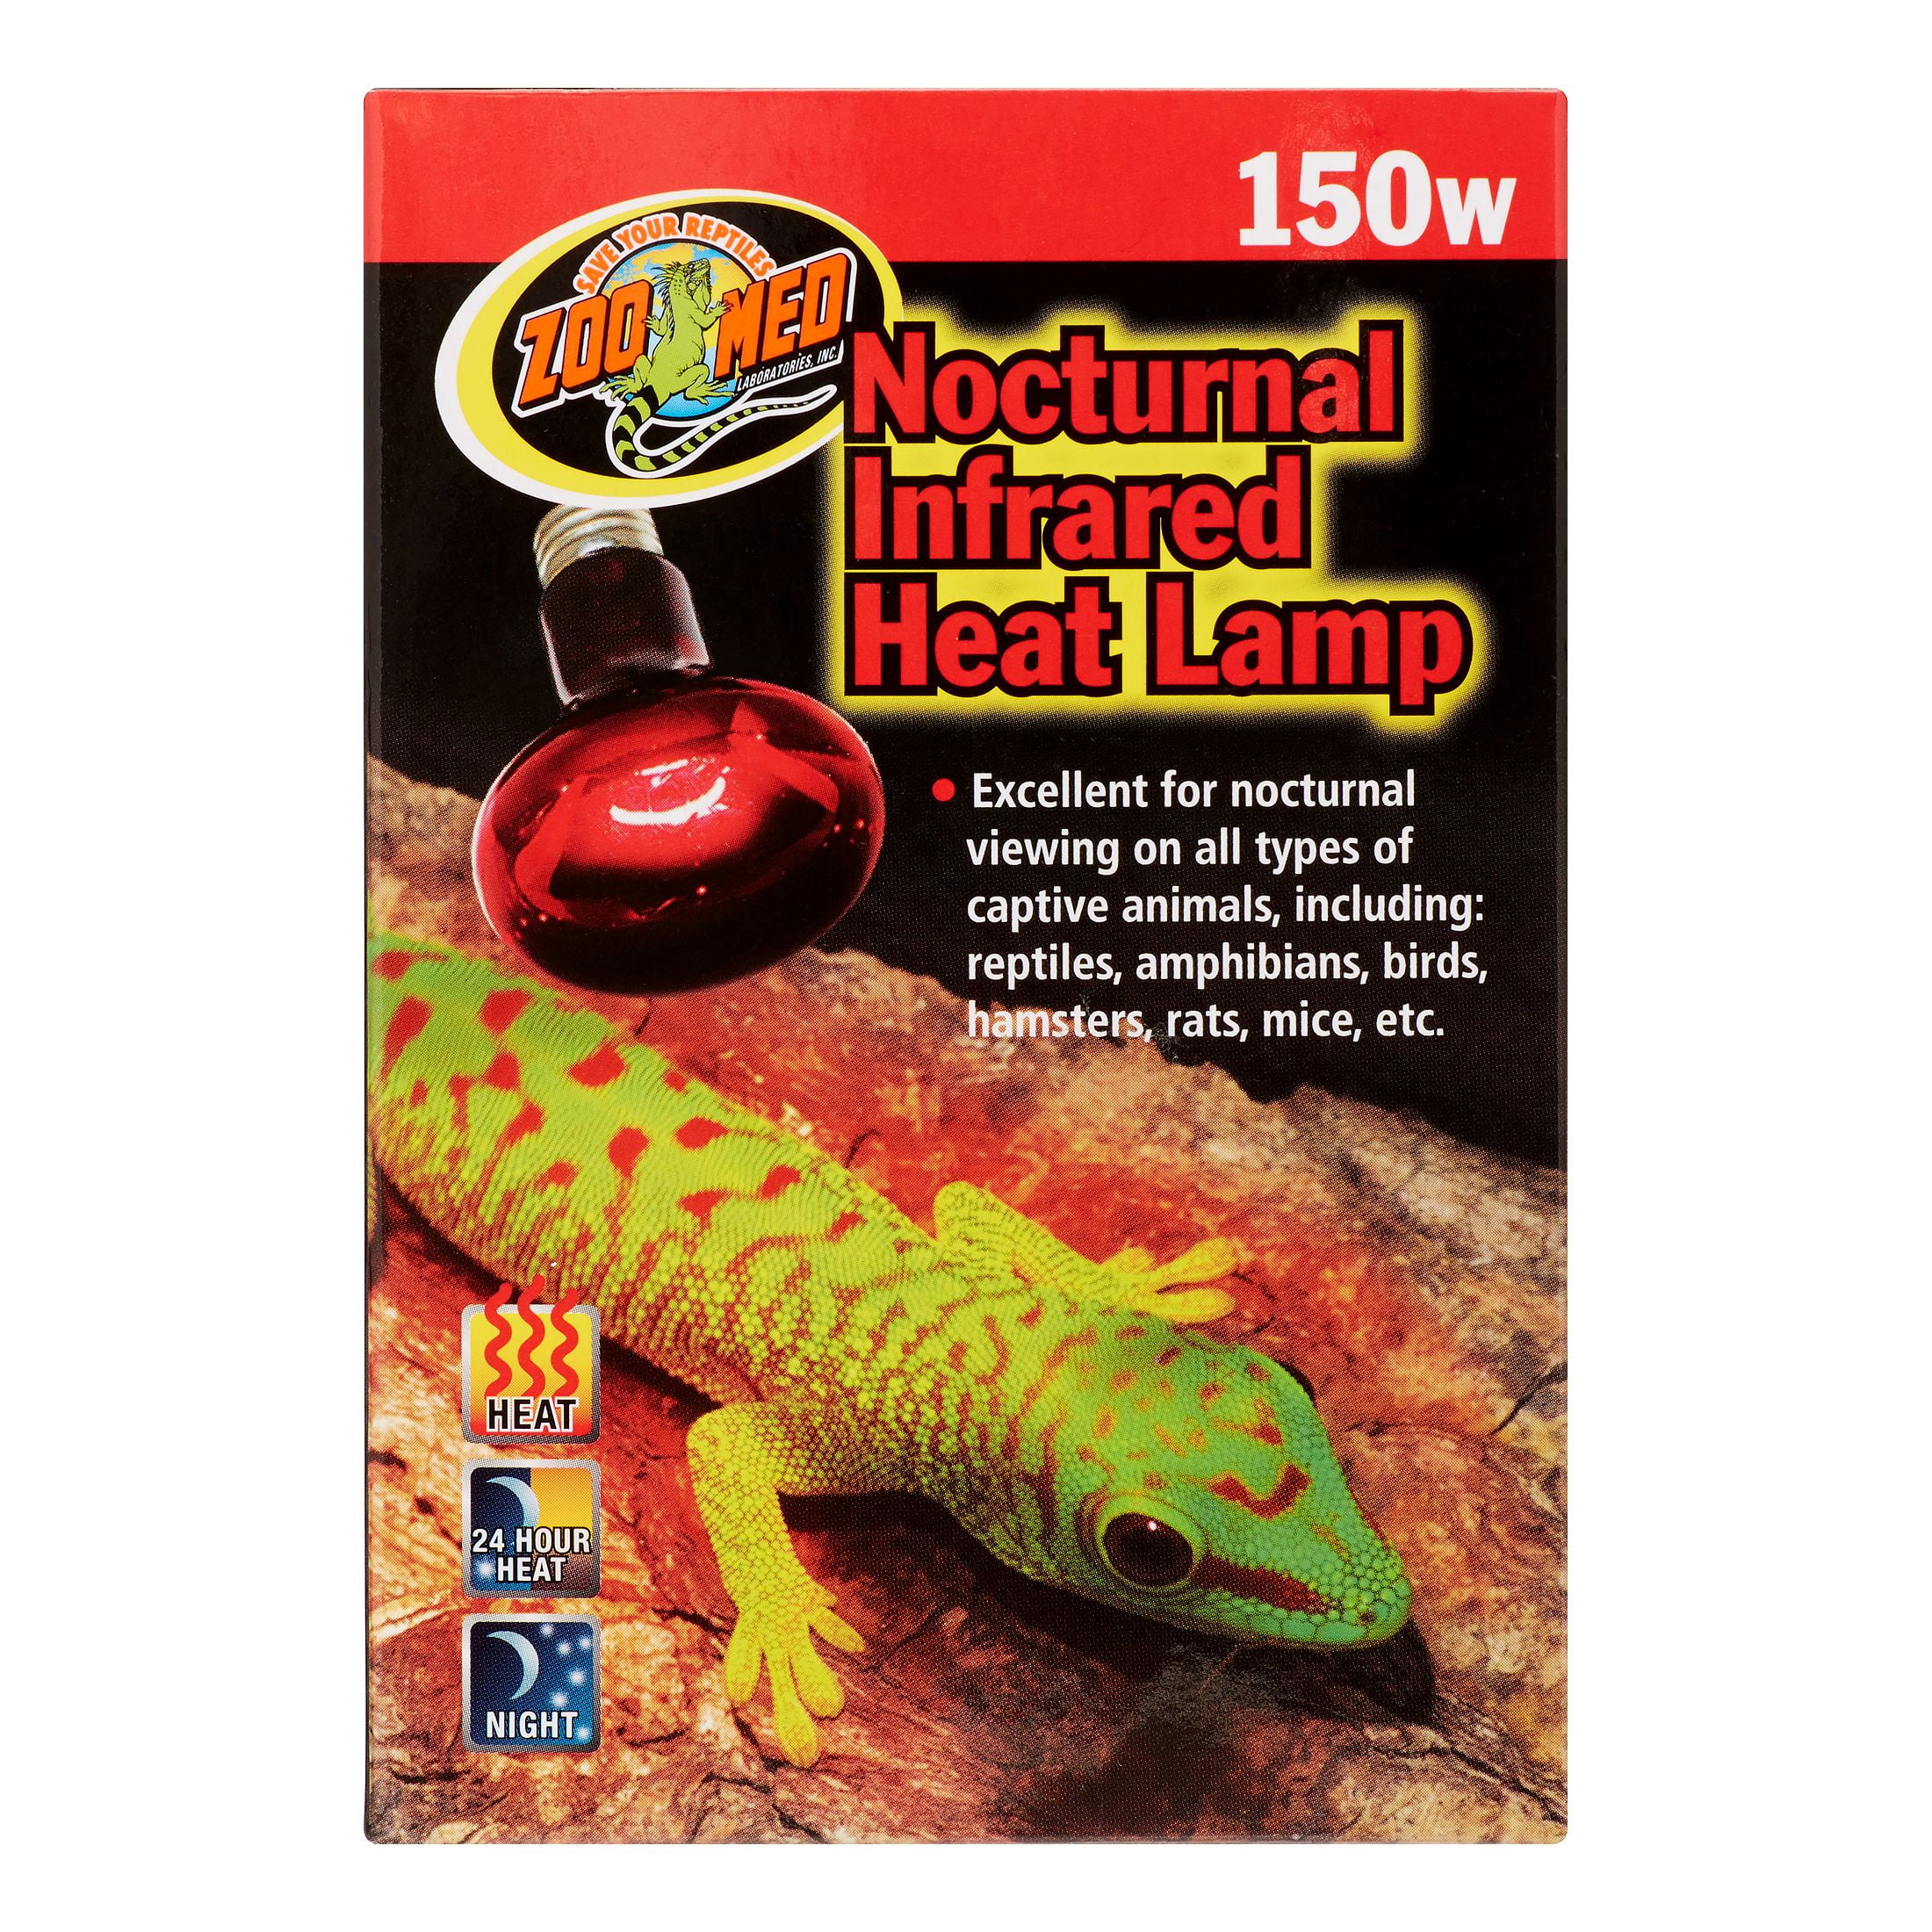 nocturnal heat lamp